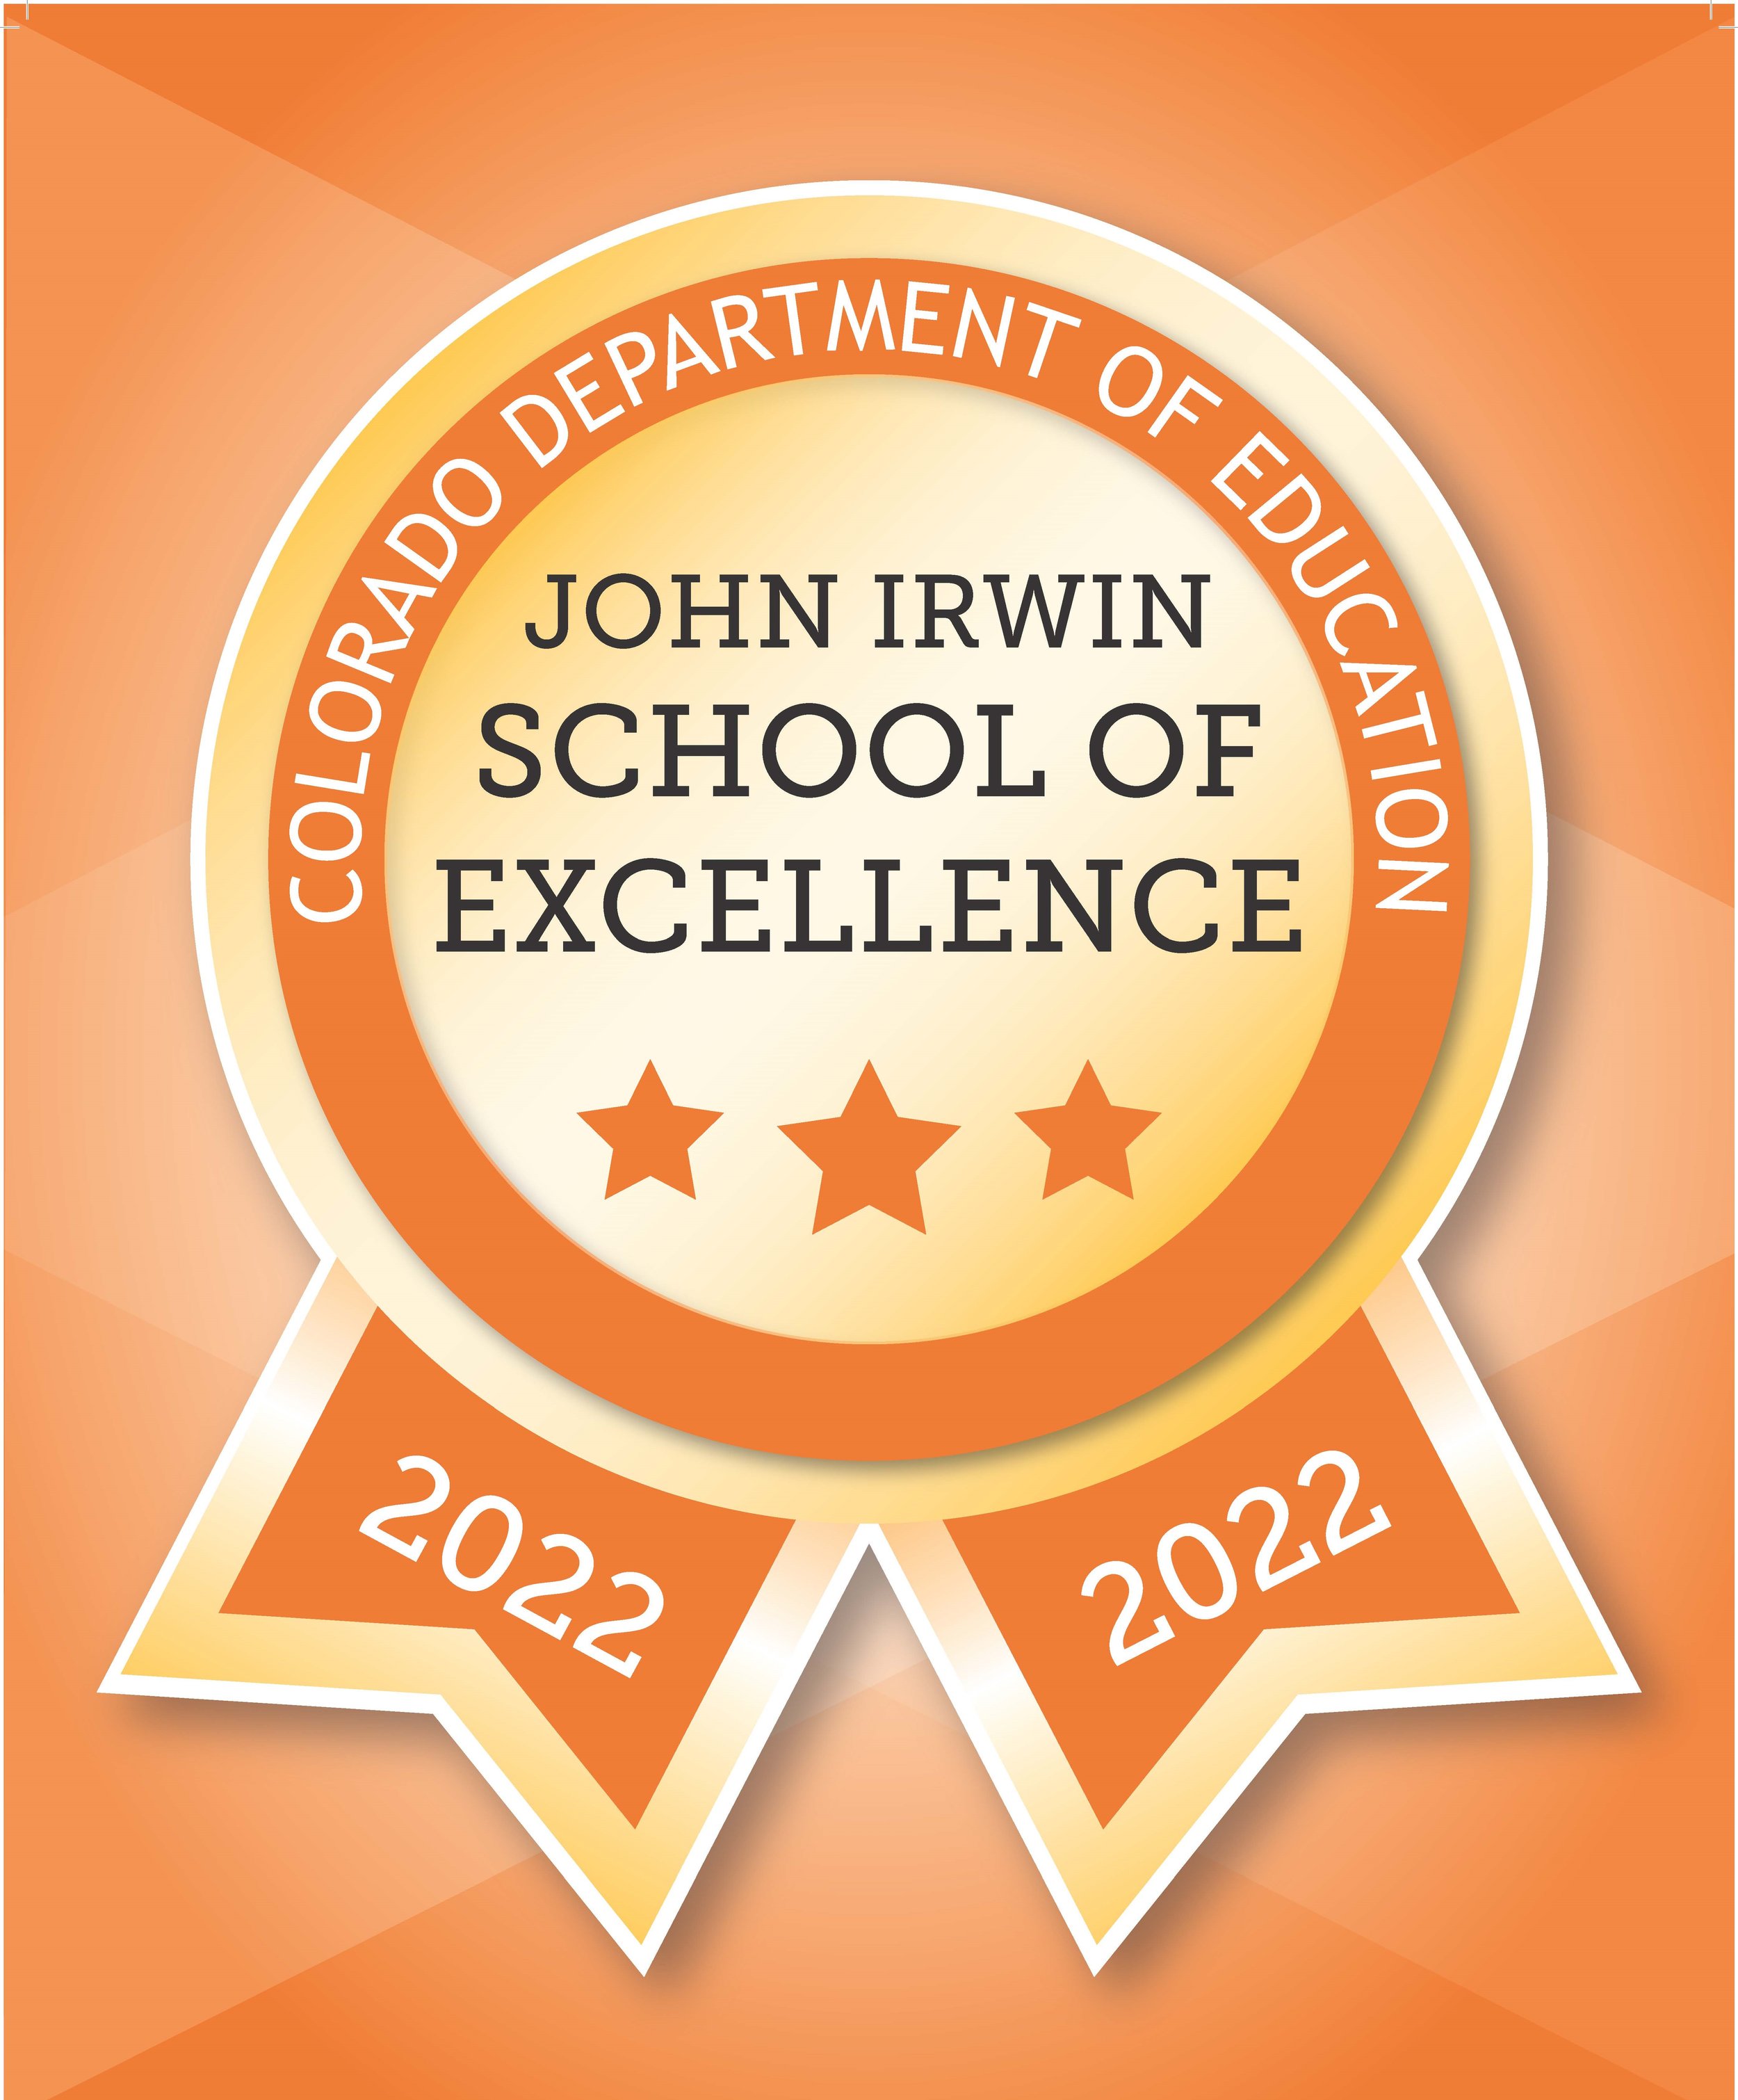 22-John Irwin School of Excellence banner (2).jpg